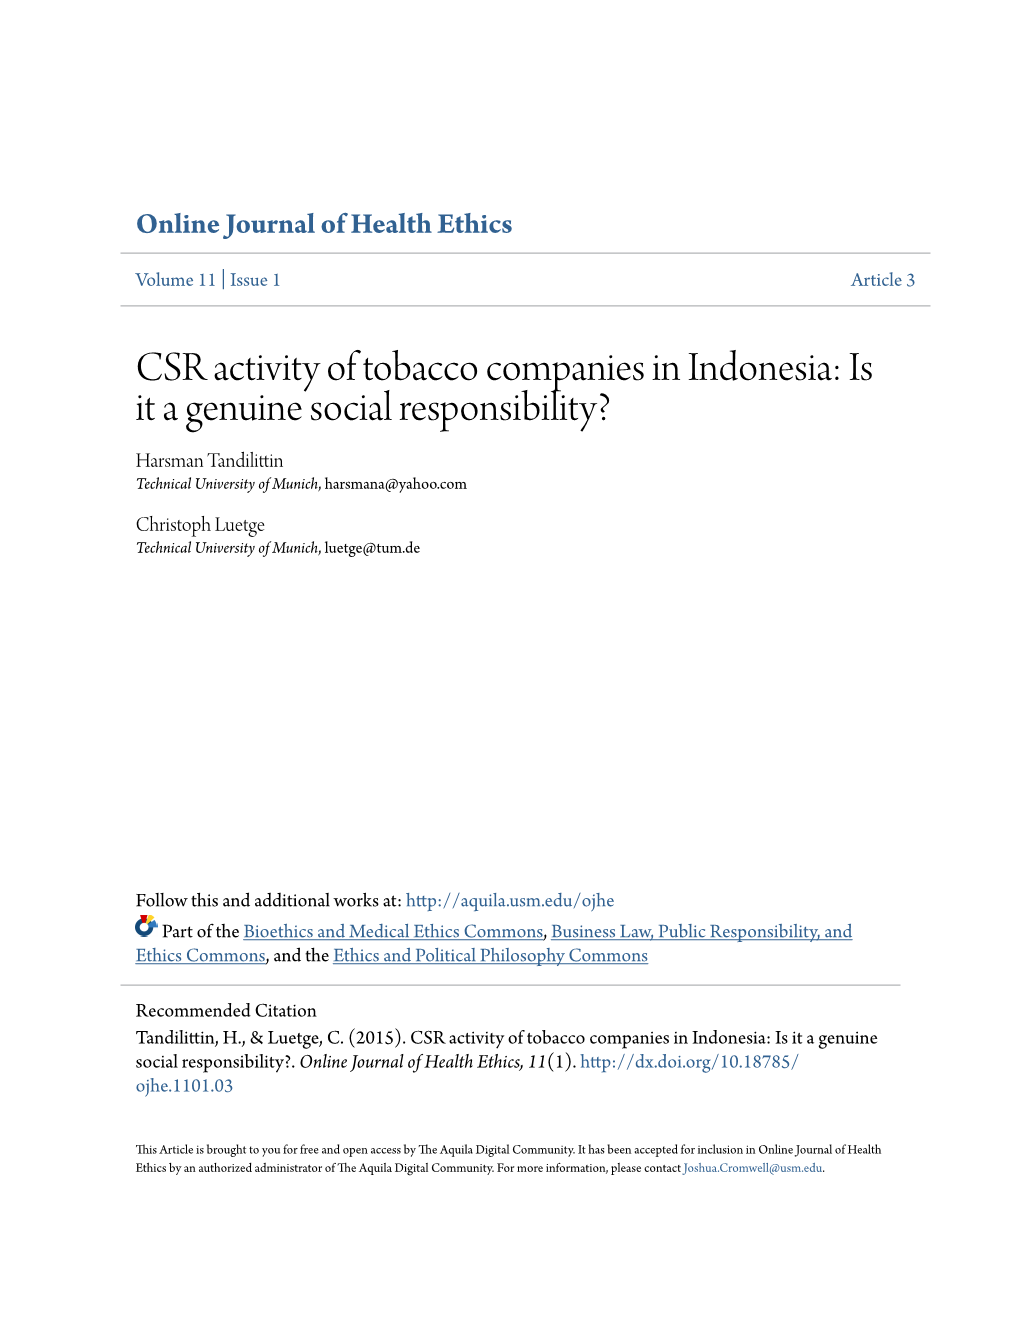 CSR Activity of Tobacco Companies in Indonesia: Is It a Genuine Social Responsibility? Harsman Tandilittin Technical University of Munich, Harsmana@Yahoo.Com